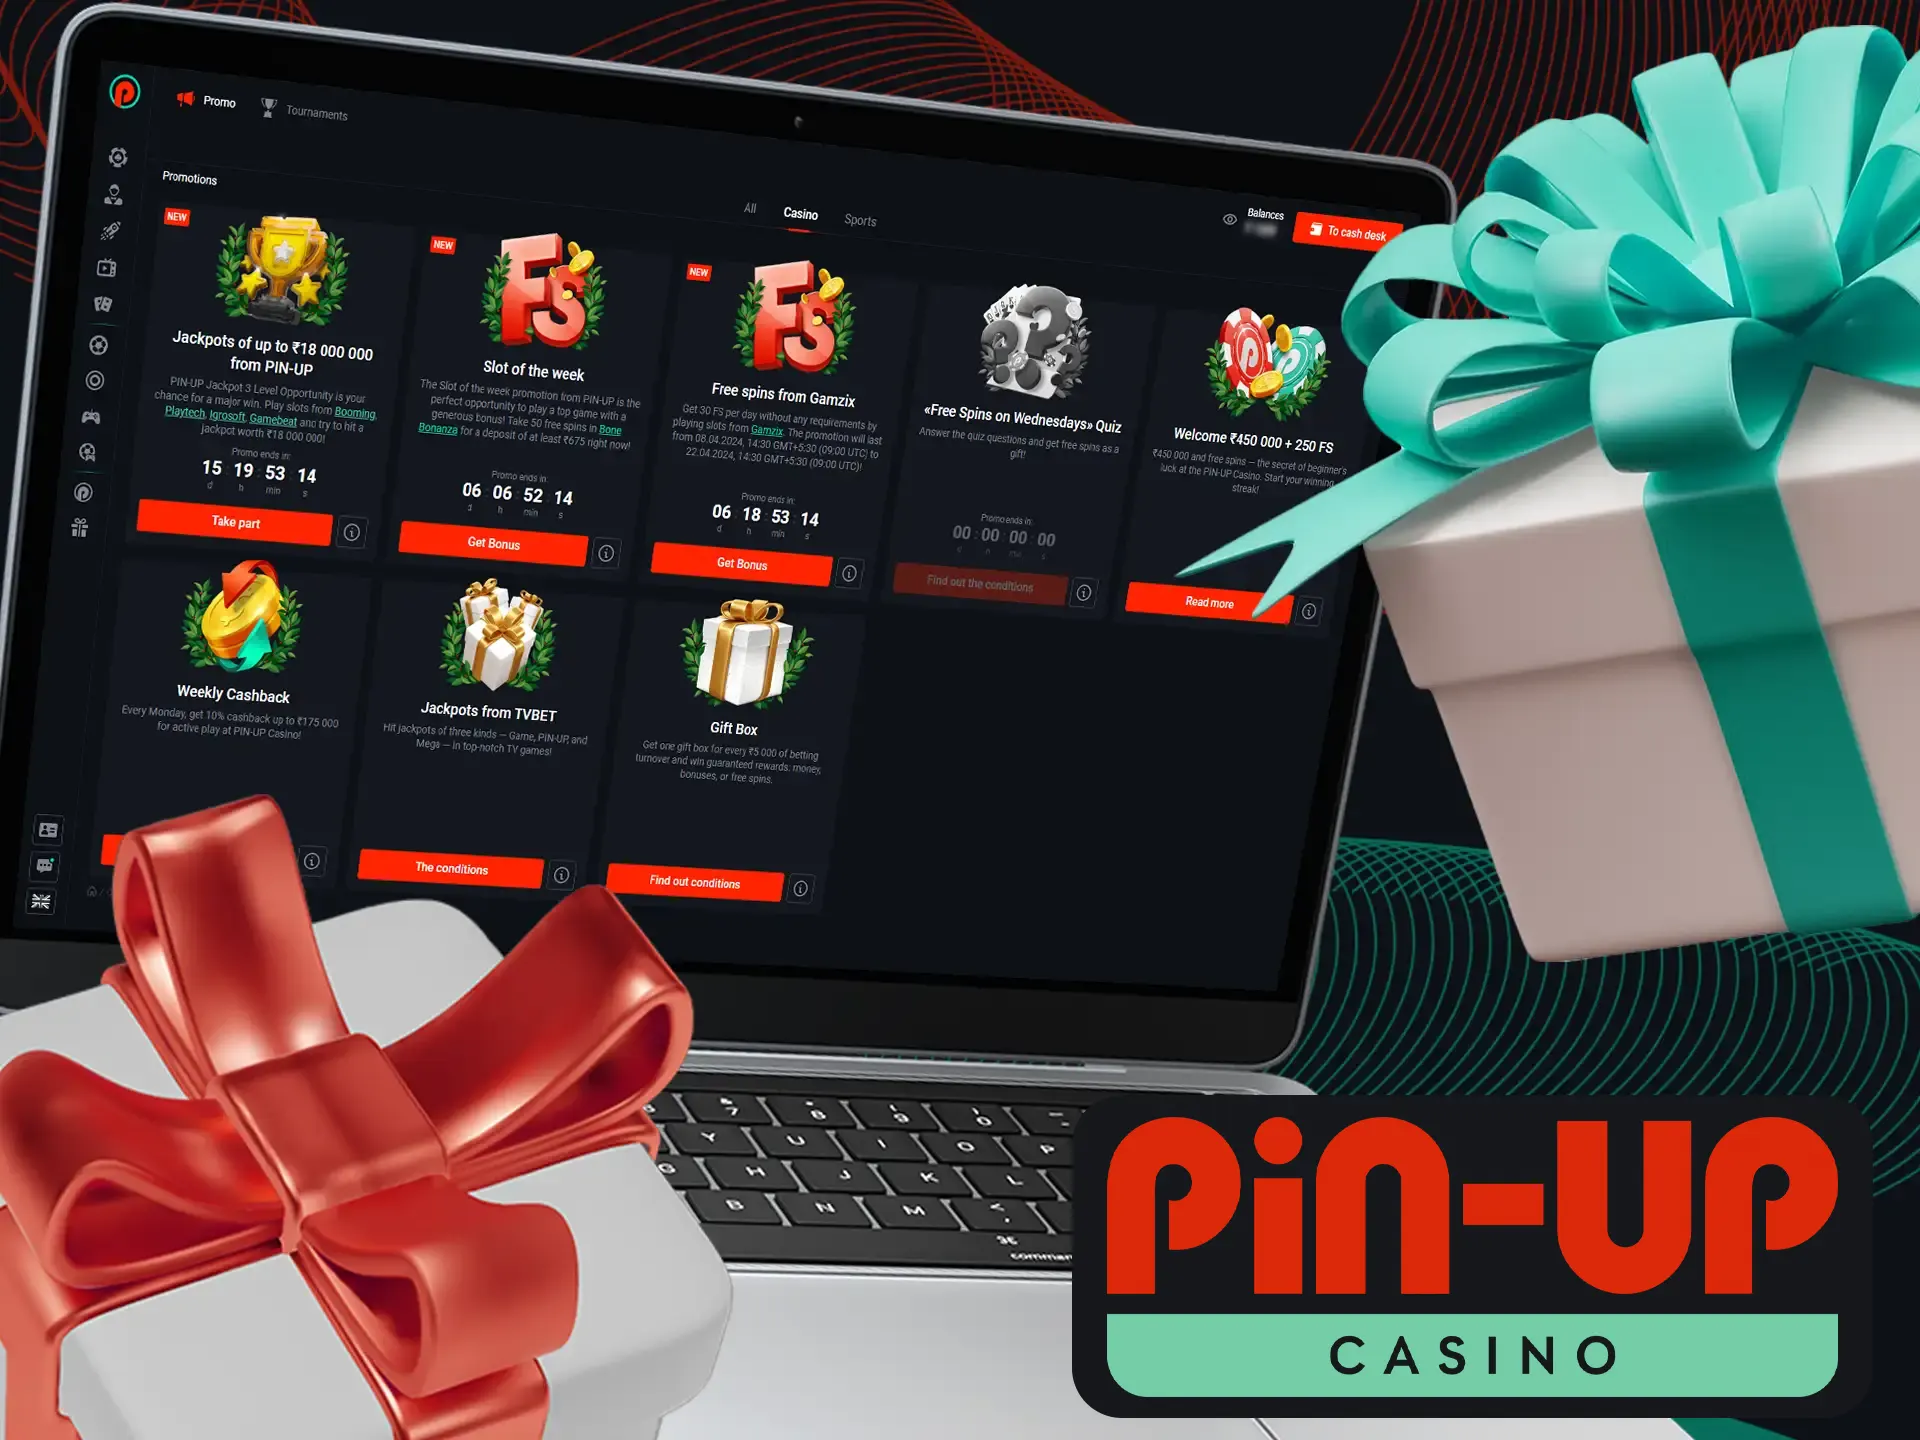 More bonus surprises await you at Pin-Up Casino.